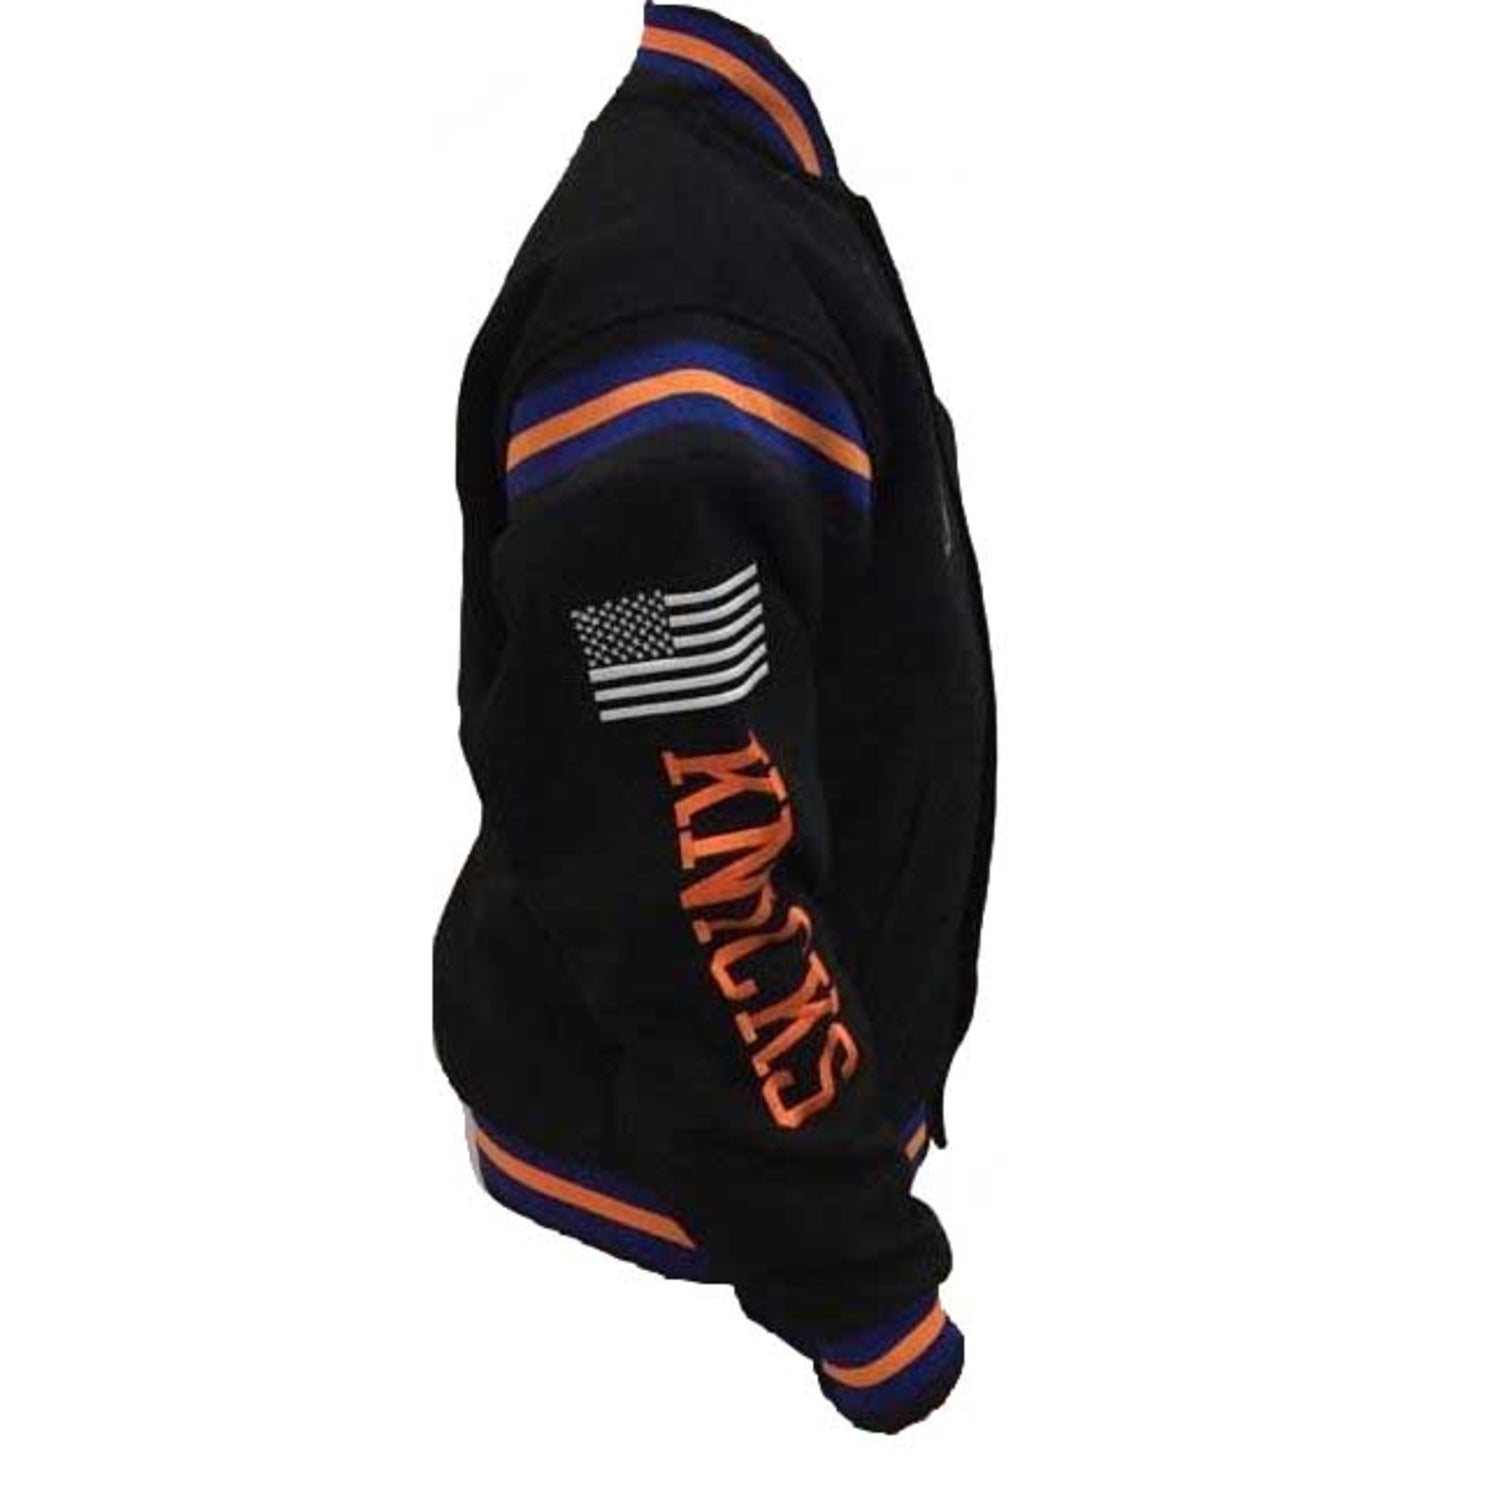 FISLL Knicks Black History Collection Varsity Jacket - Right View